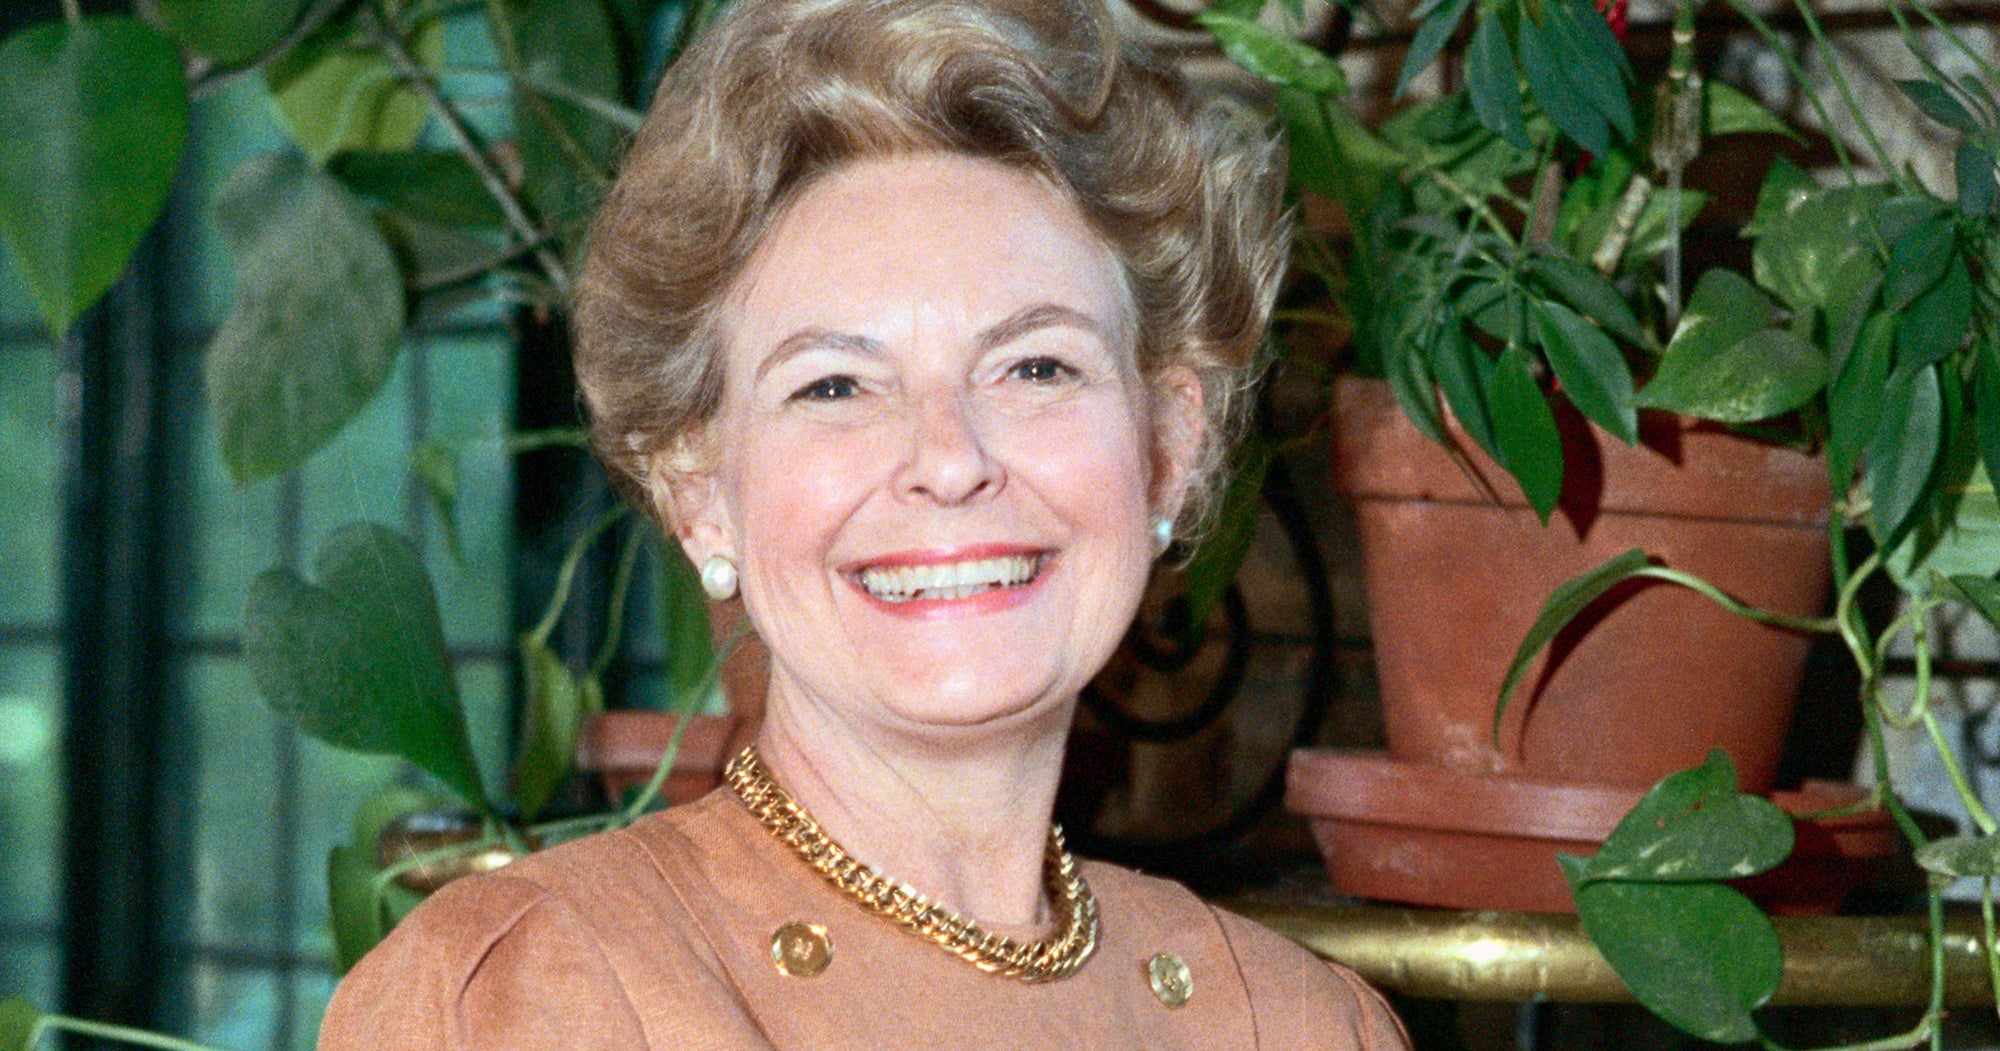 Phyllis Piper Obituary